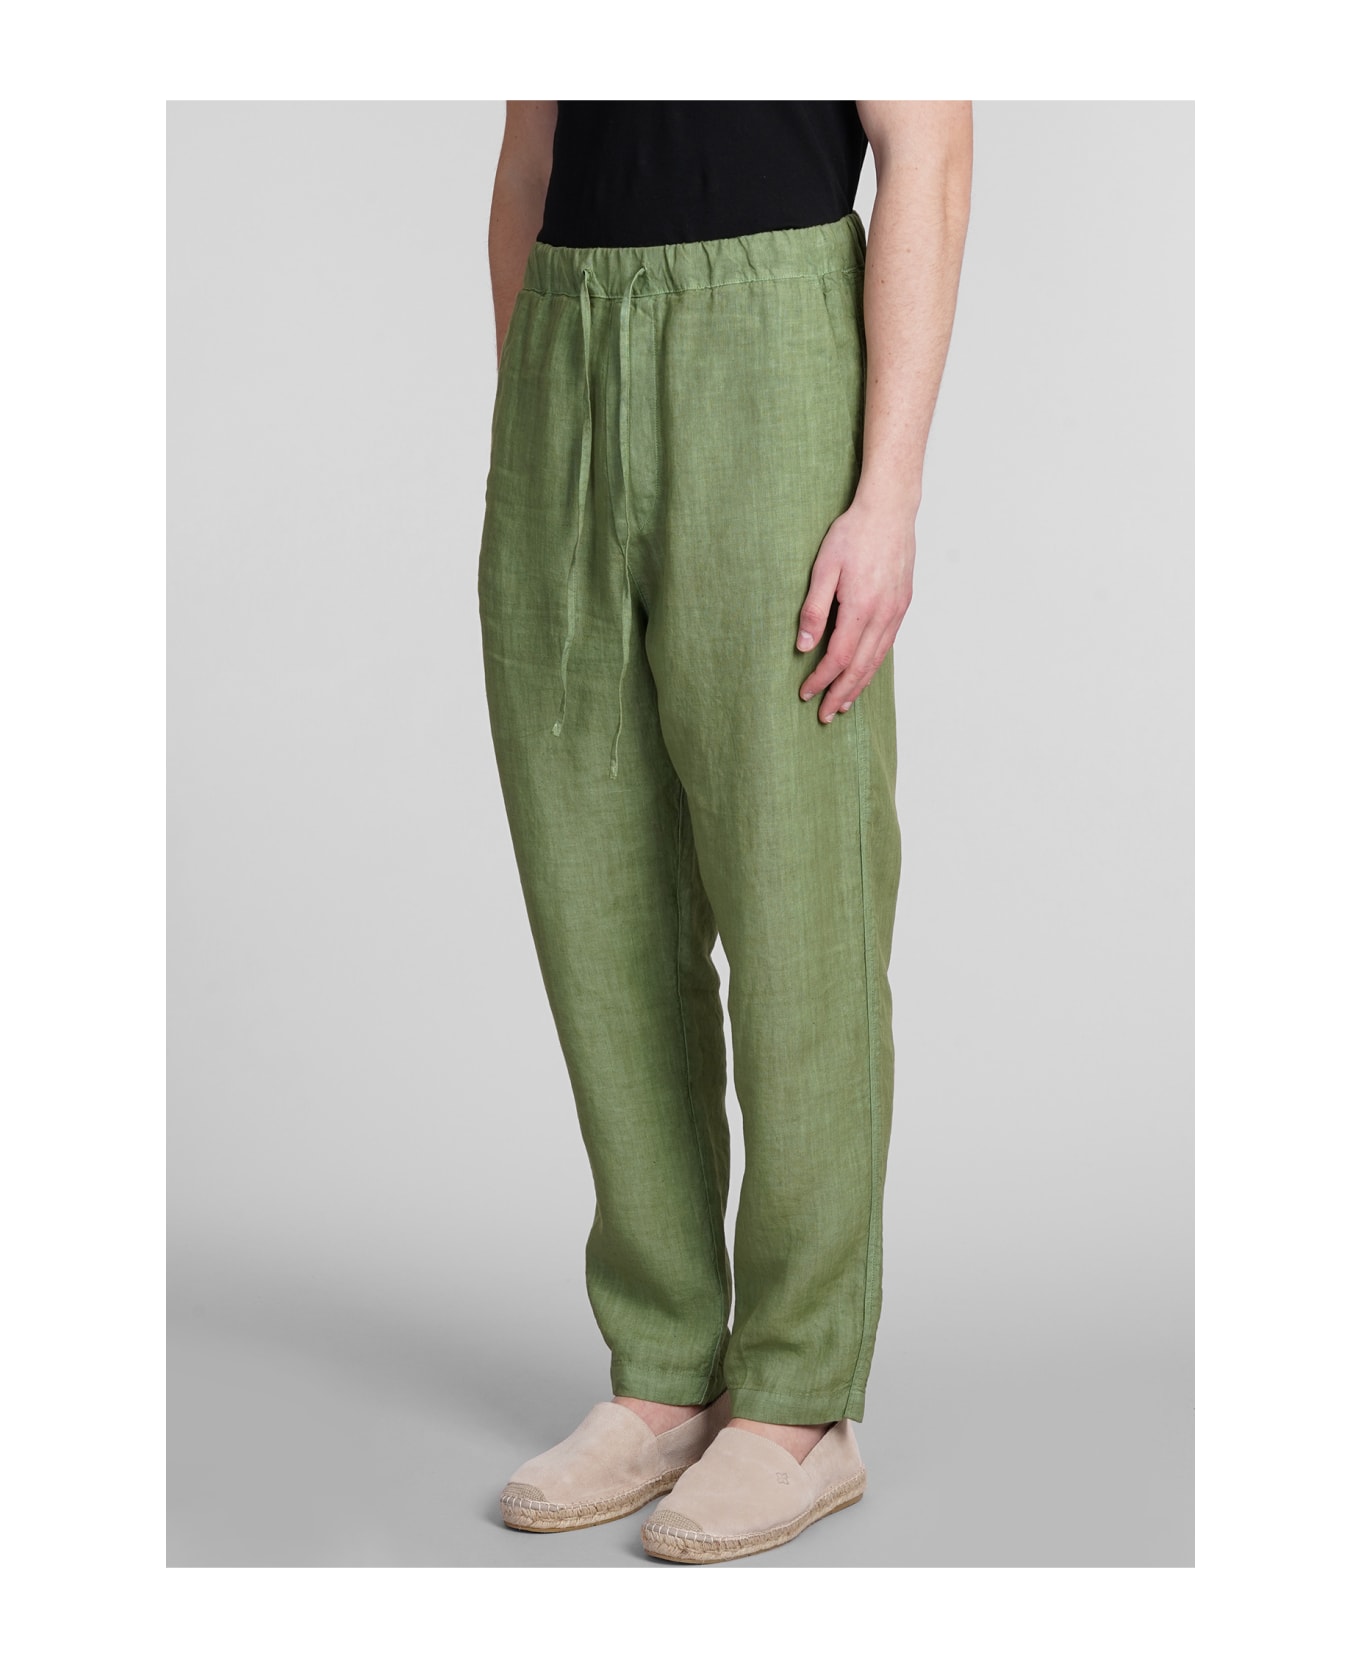 120% Lino Pants In Green Linen